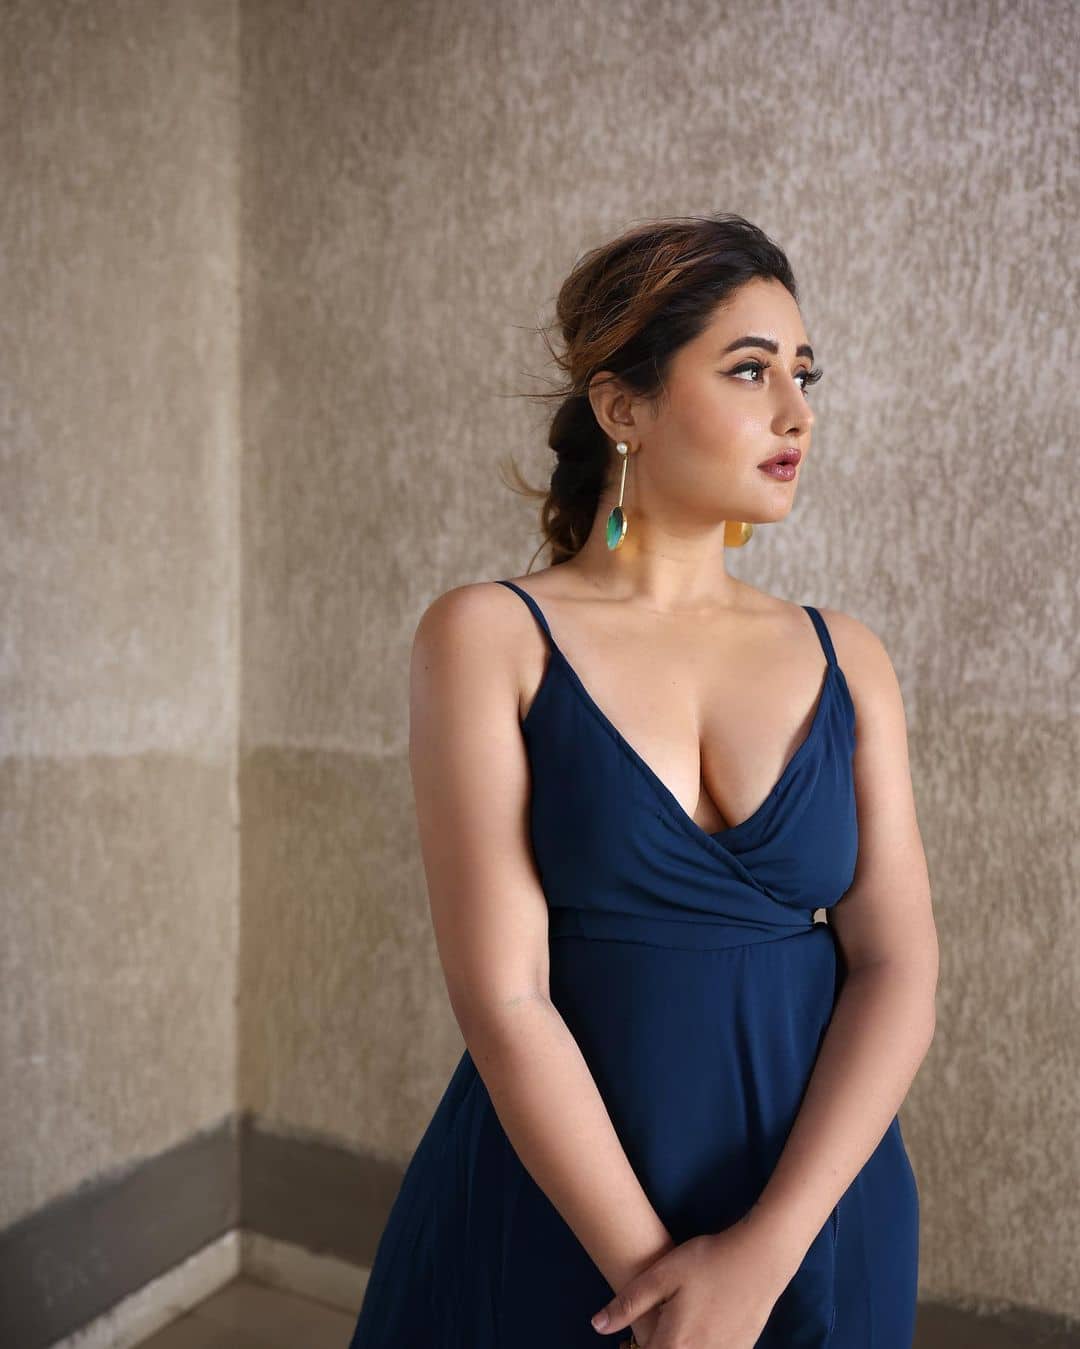 Telugu Ankar Sex Rashmi Vidio - Rashmi Desai drives away Monday blues in a sexy blue dress: PICS | News |  Zee News